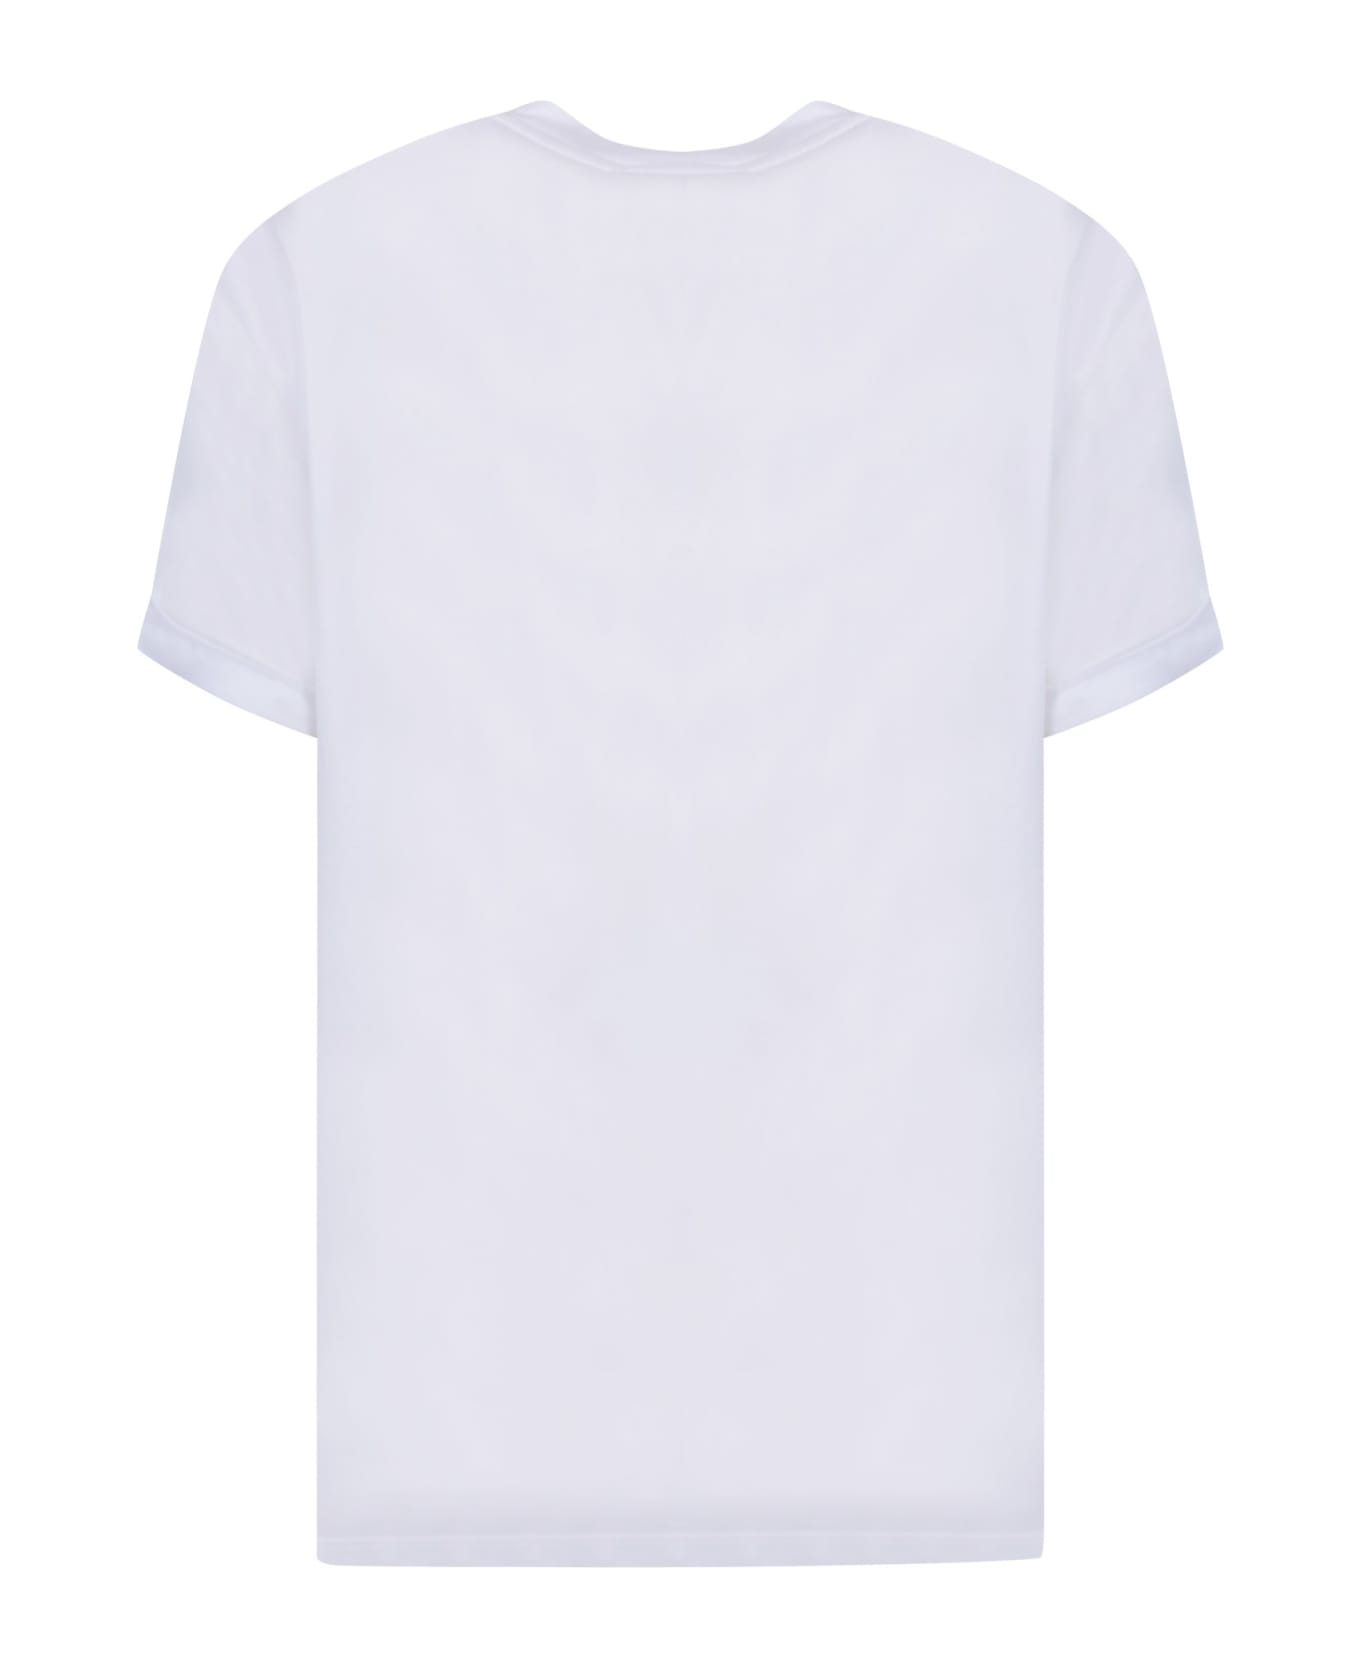 Stella McCartney Chest Embroidery White T-shirt - White Tシャツ